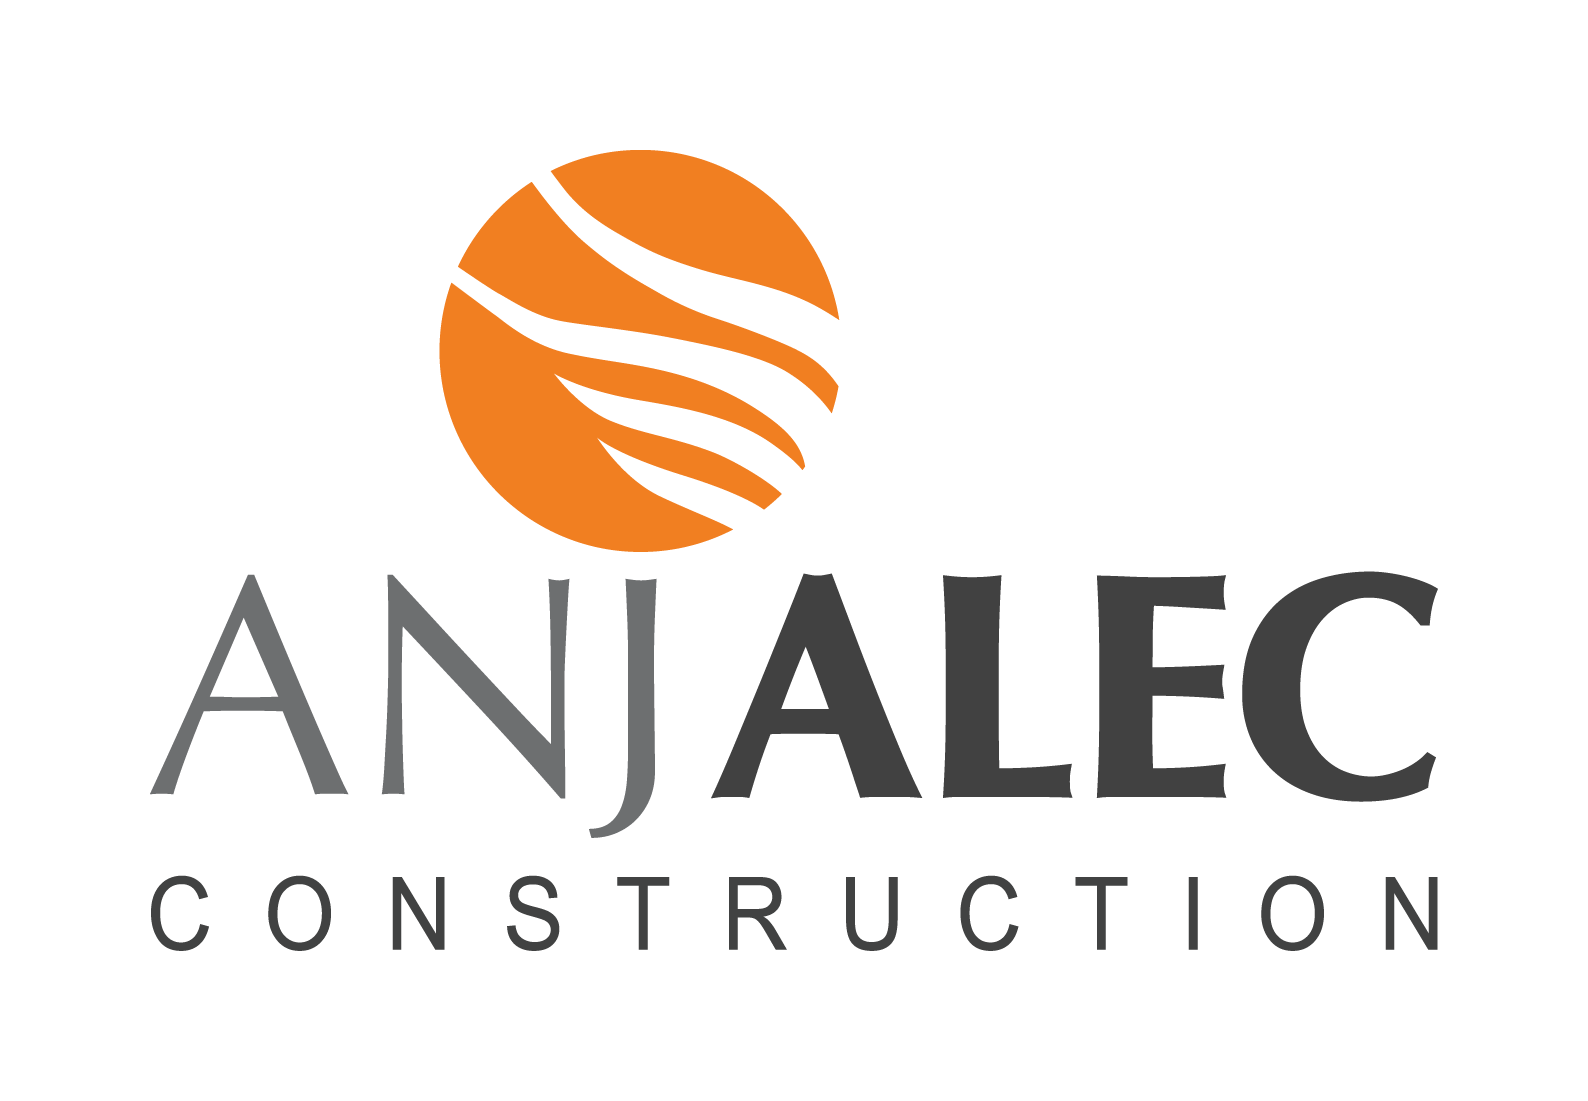 Anjalec Construction inc.